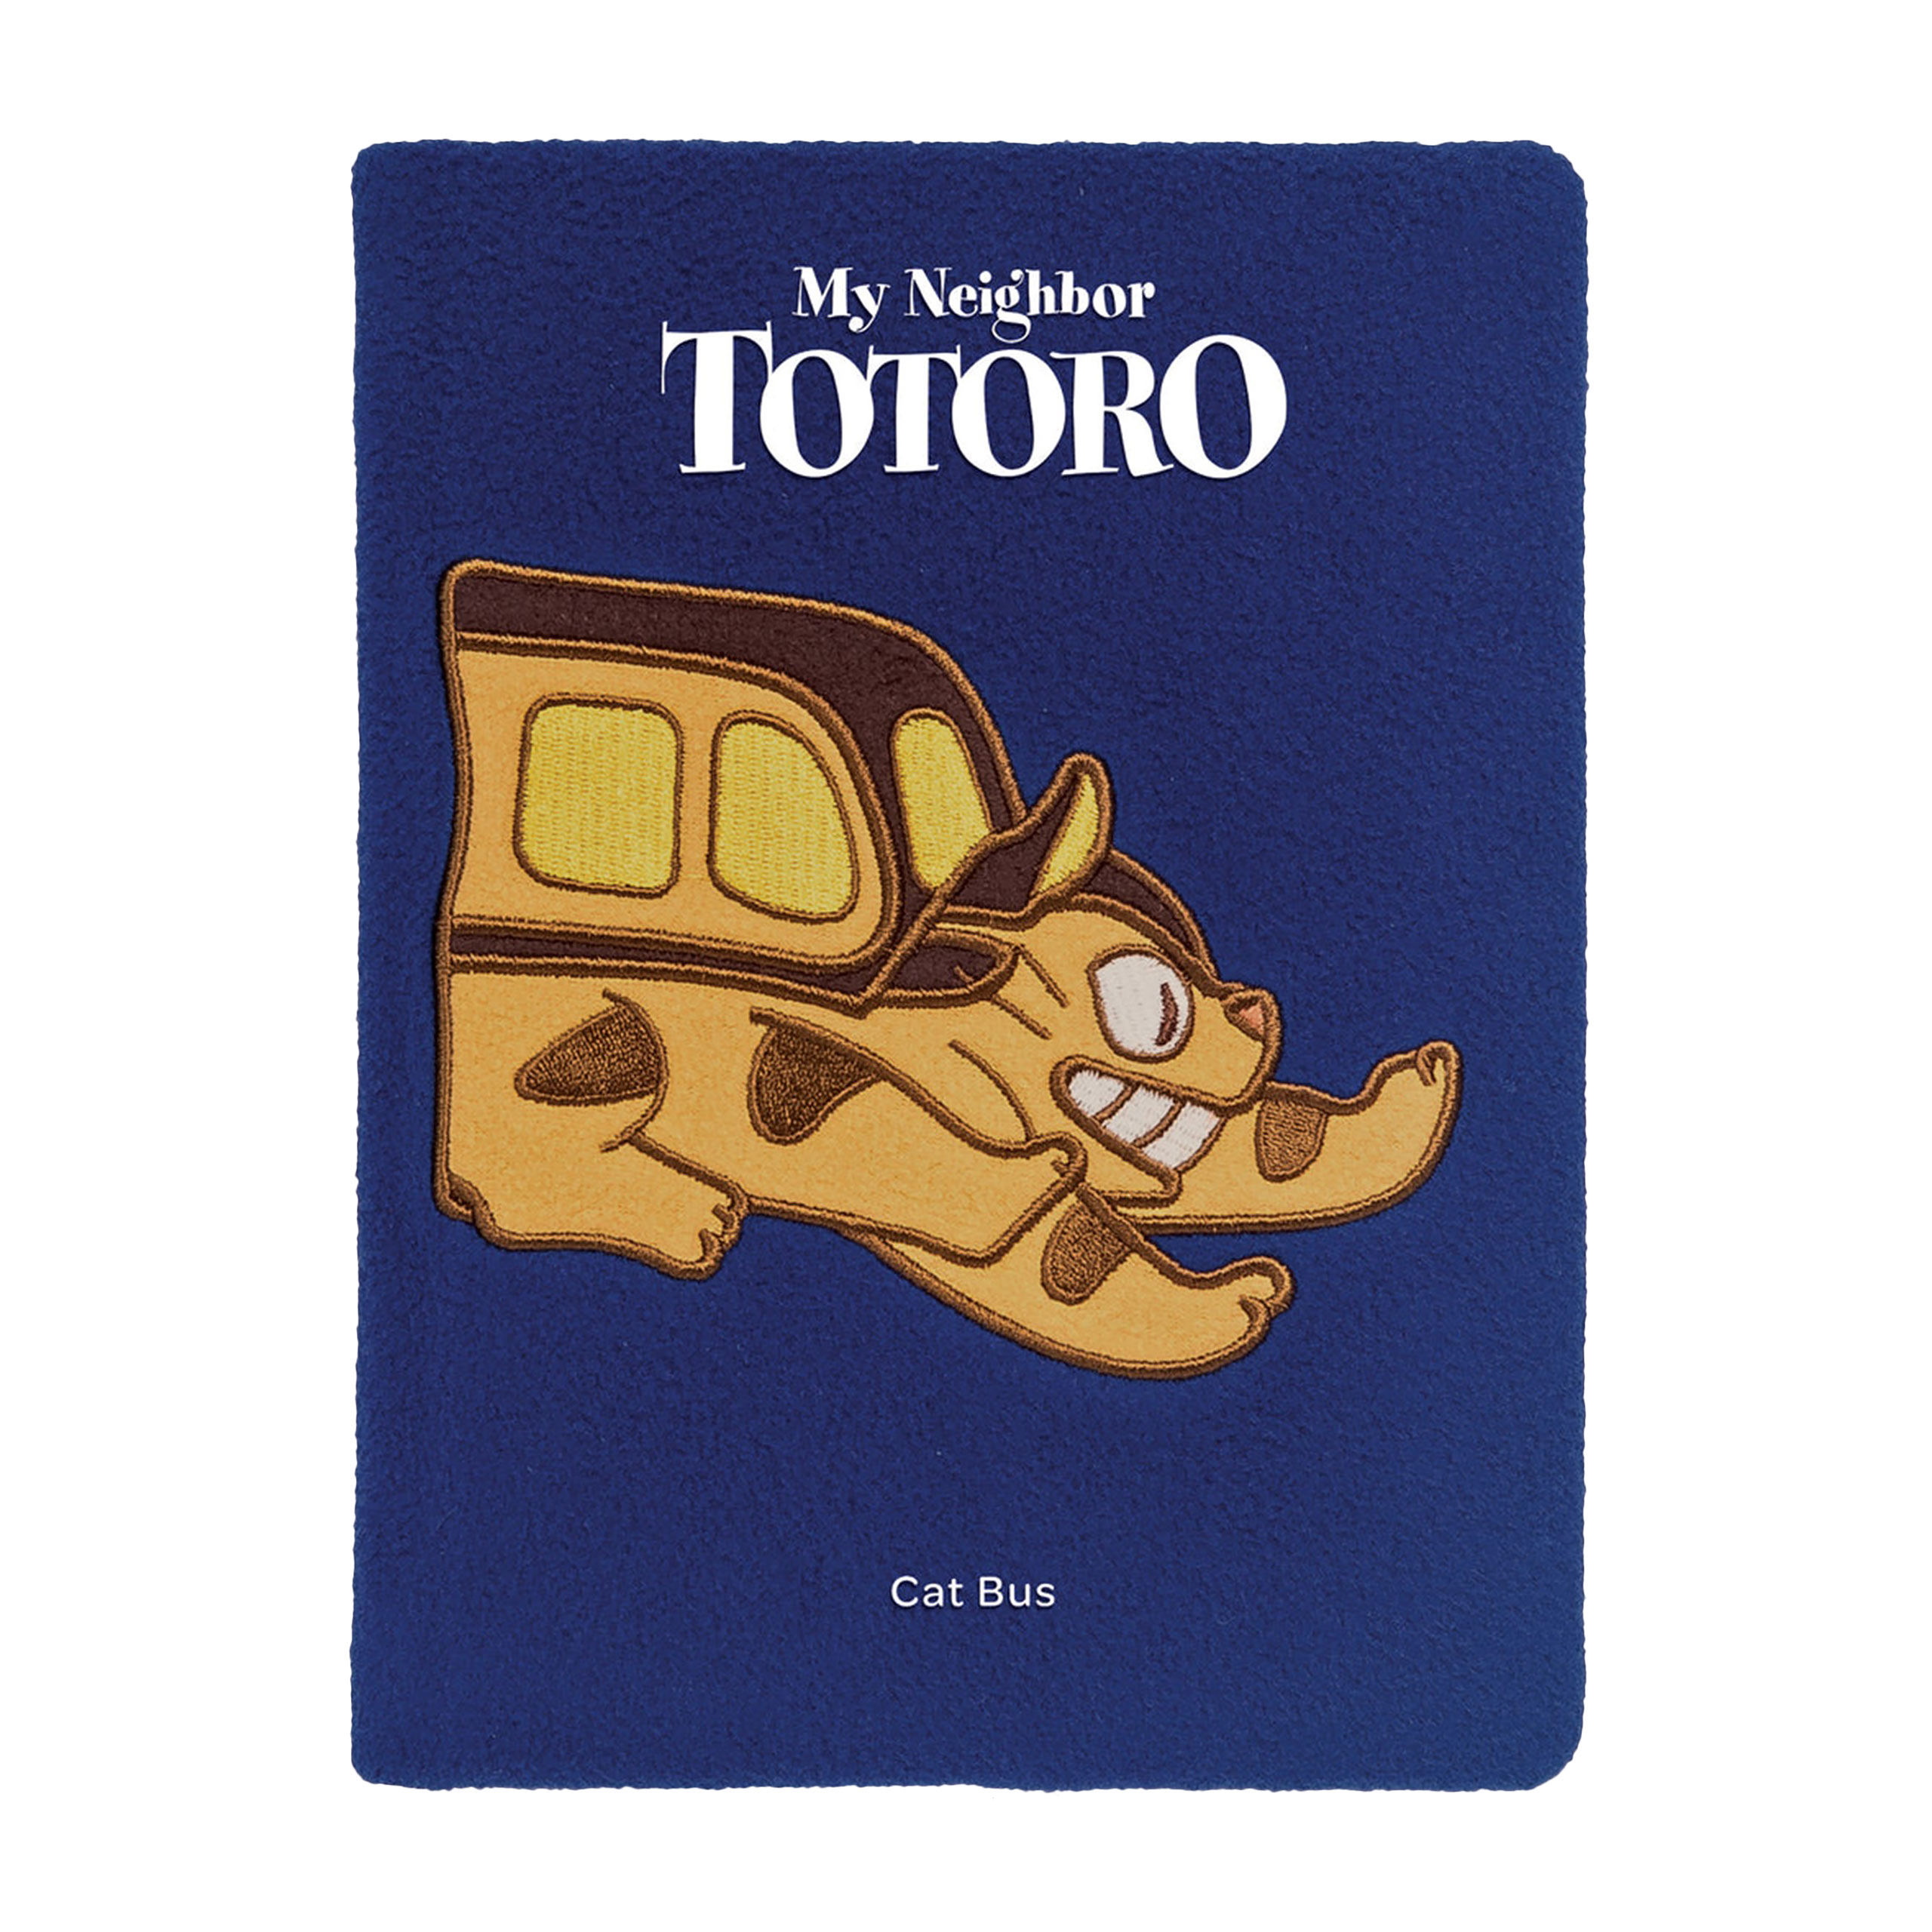 Mon Voisin Totoro - Cahier en peluche Catbus